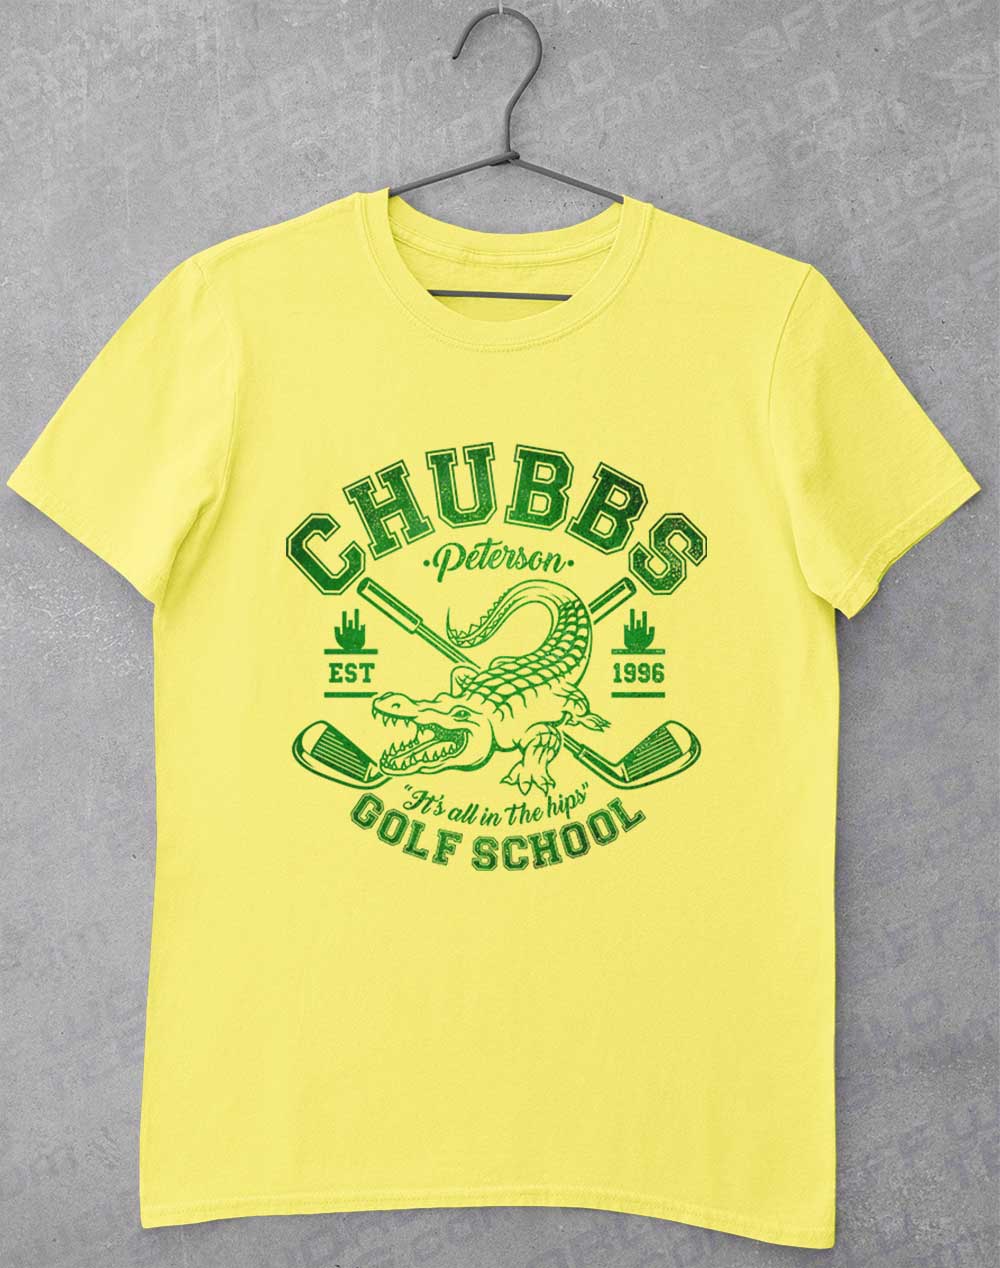 Cornsilk - Chubb's Golf School 1996 T-Shirt